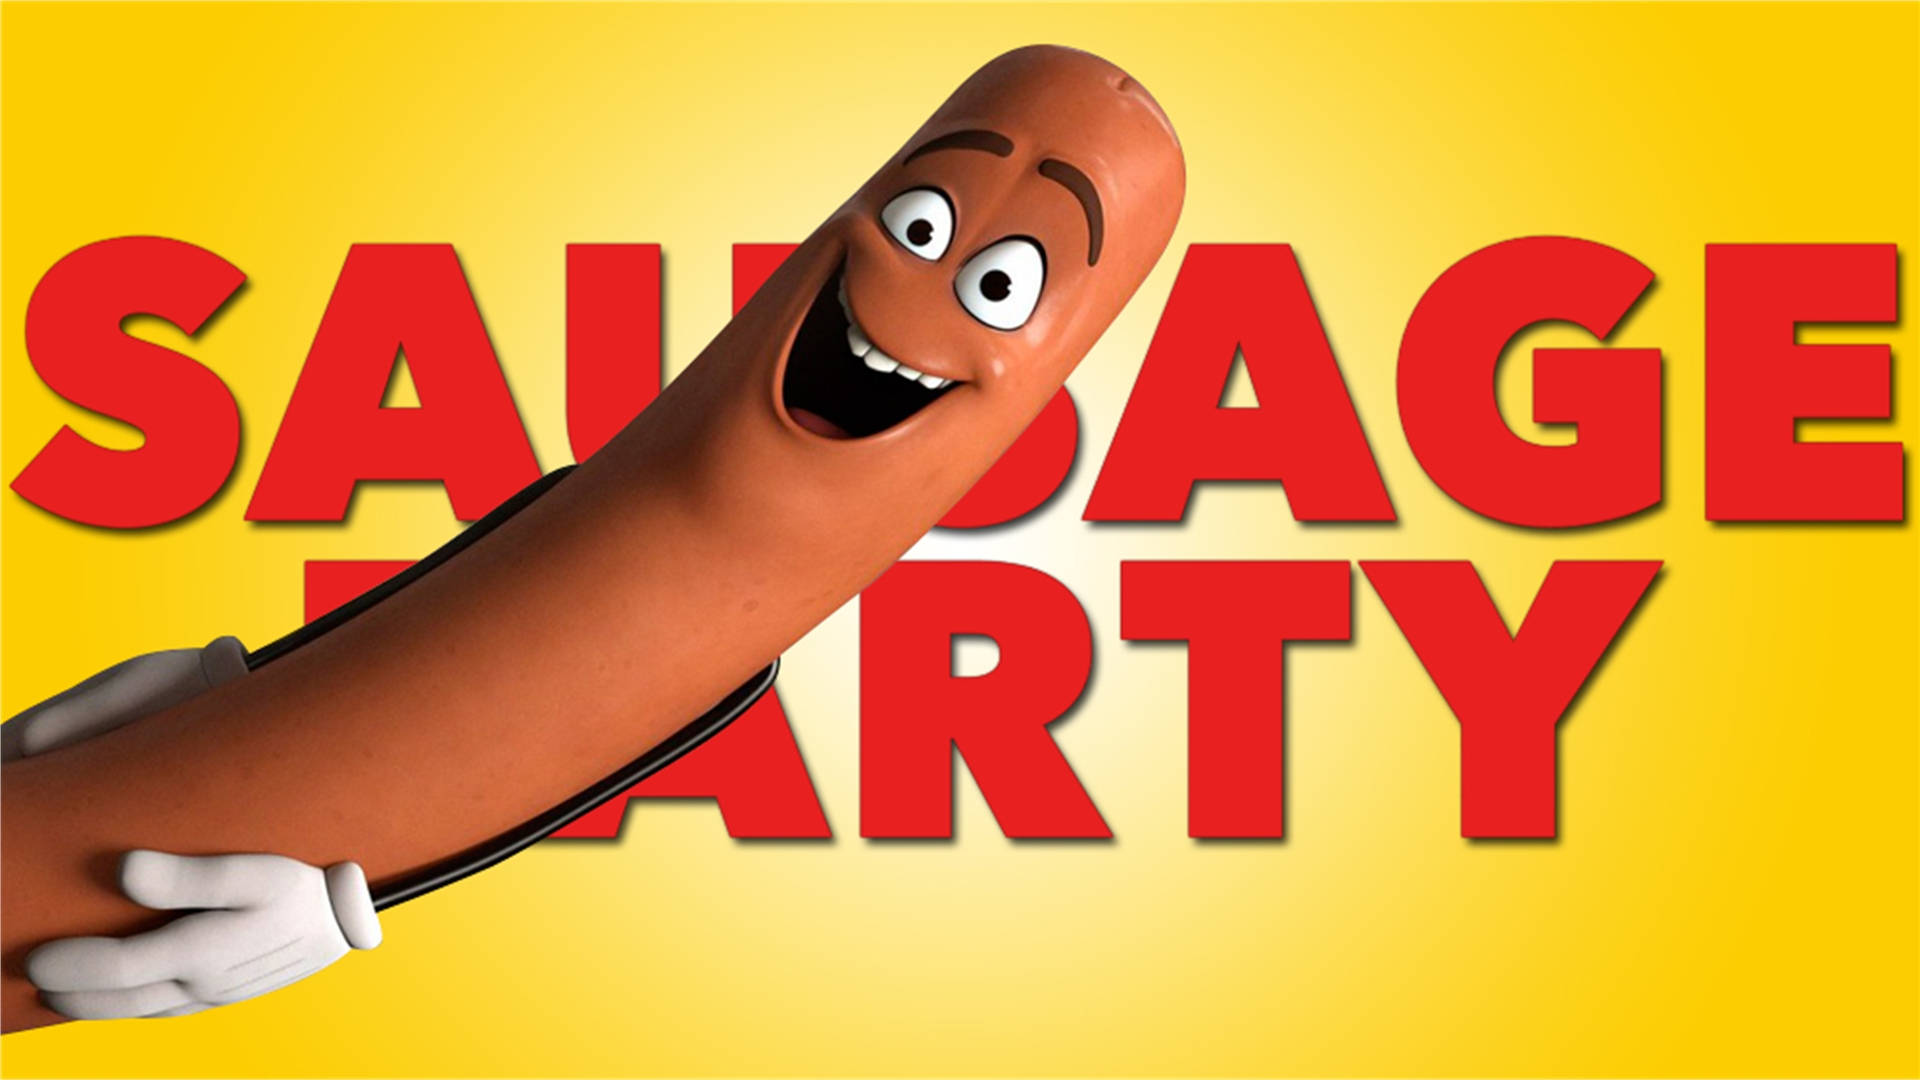 Frank Smiling Sausage Party Wallpaper